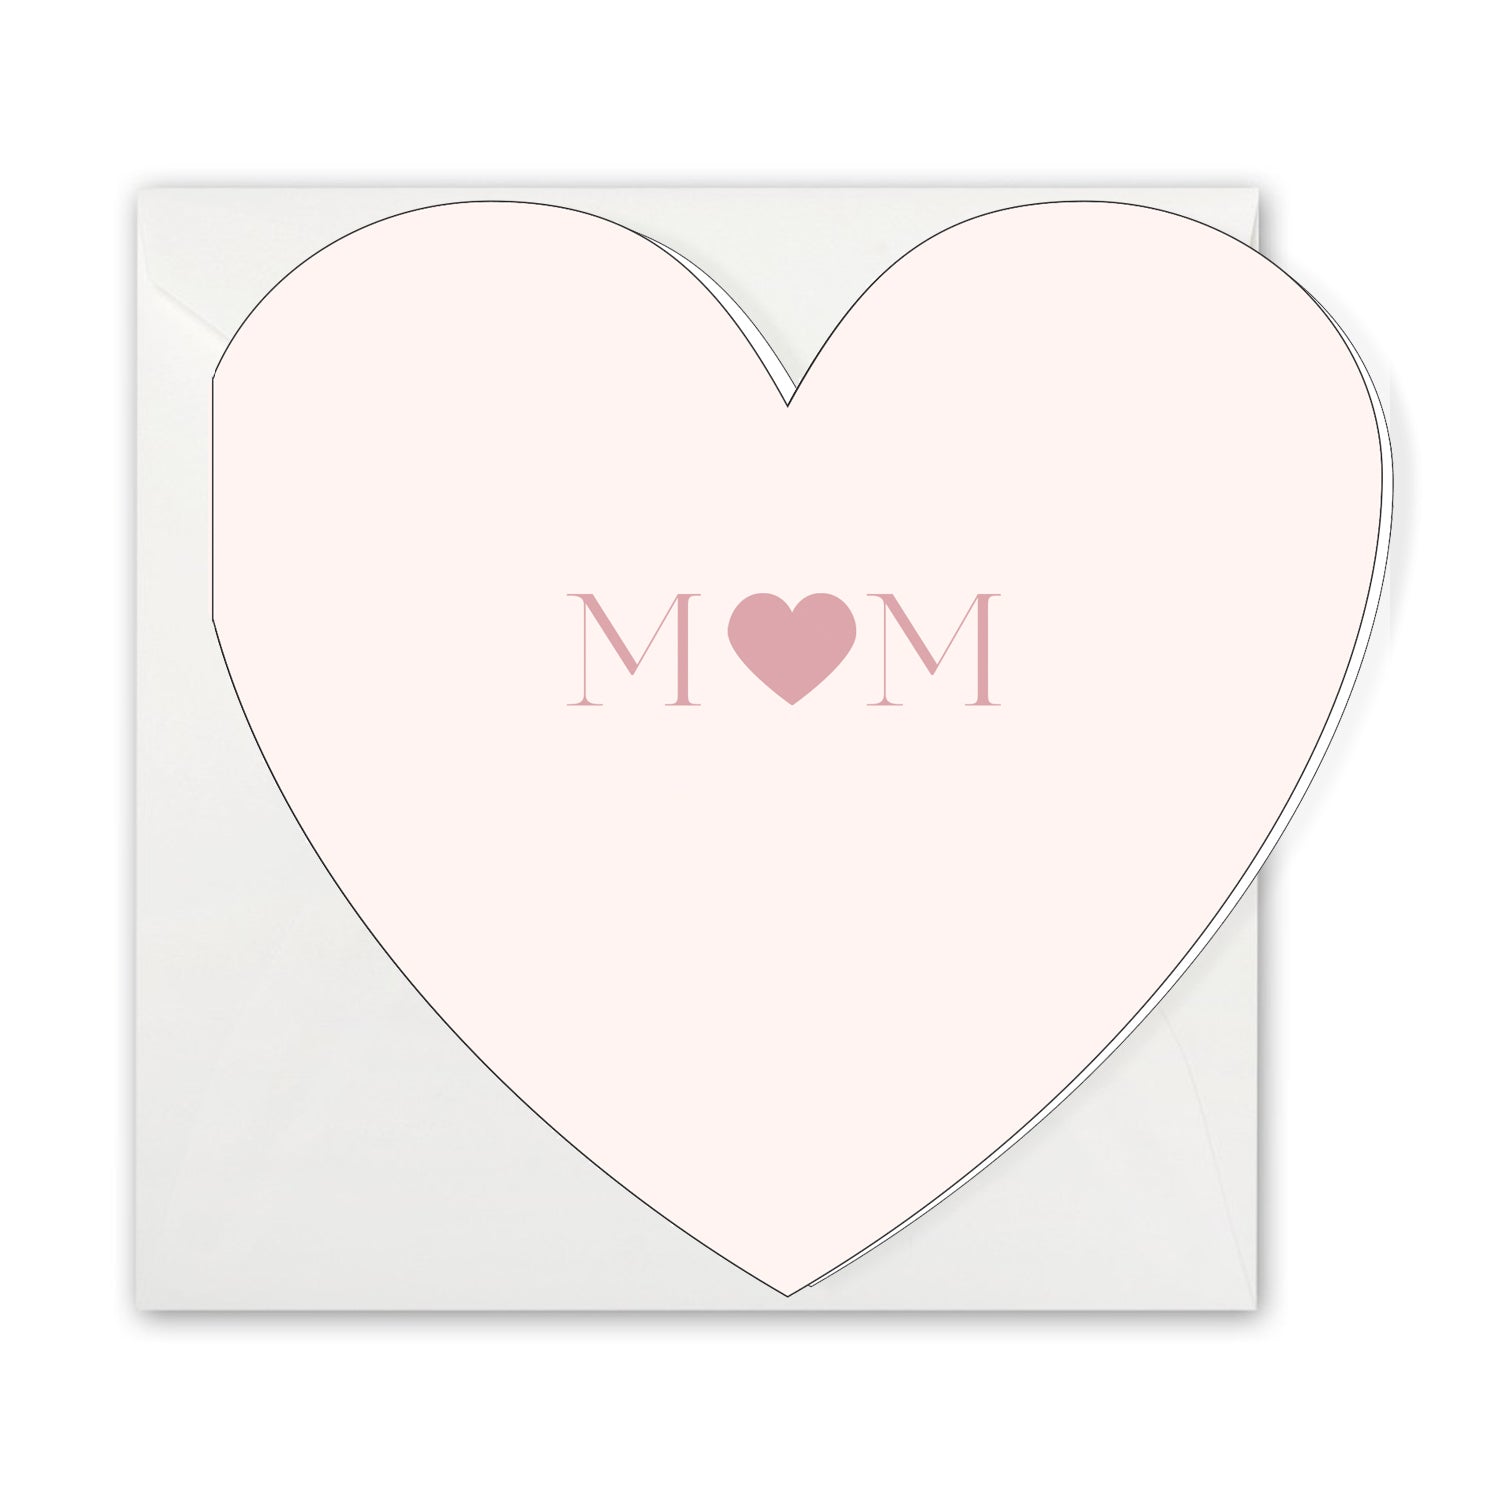 Mom | Heart Card